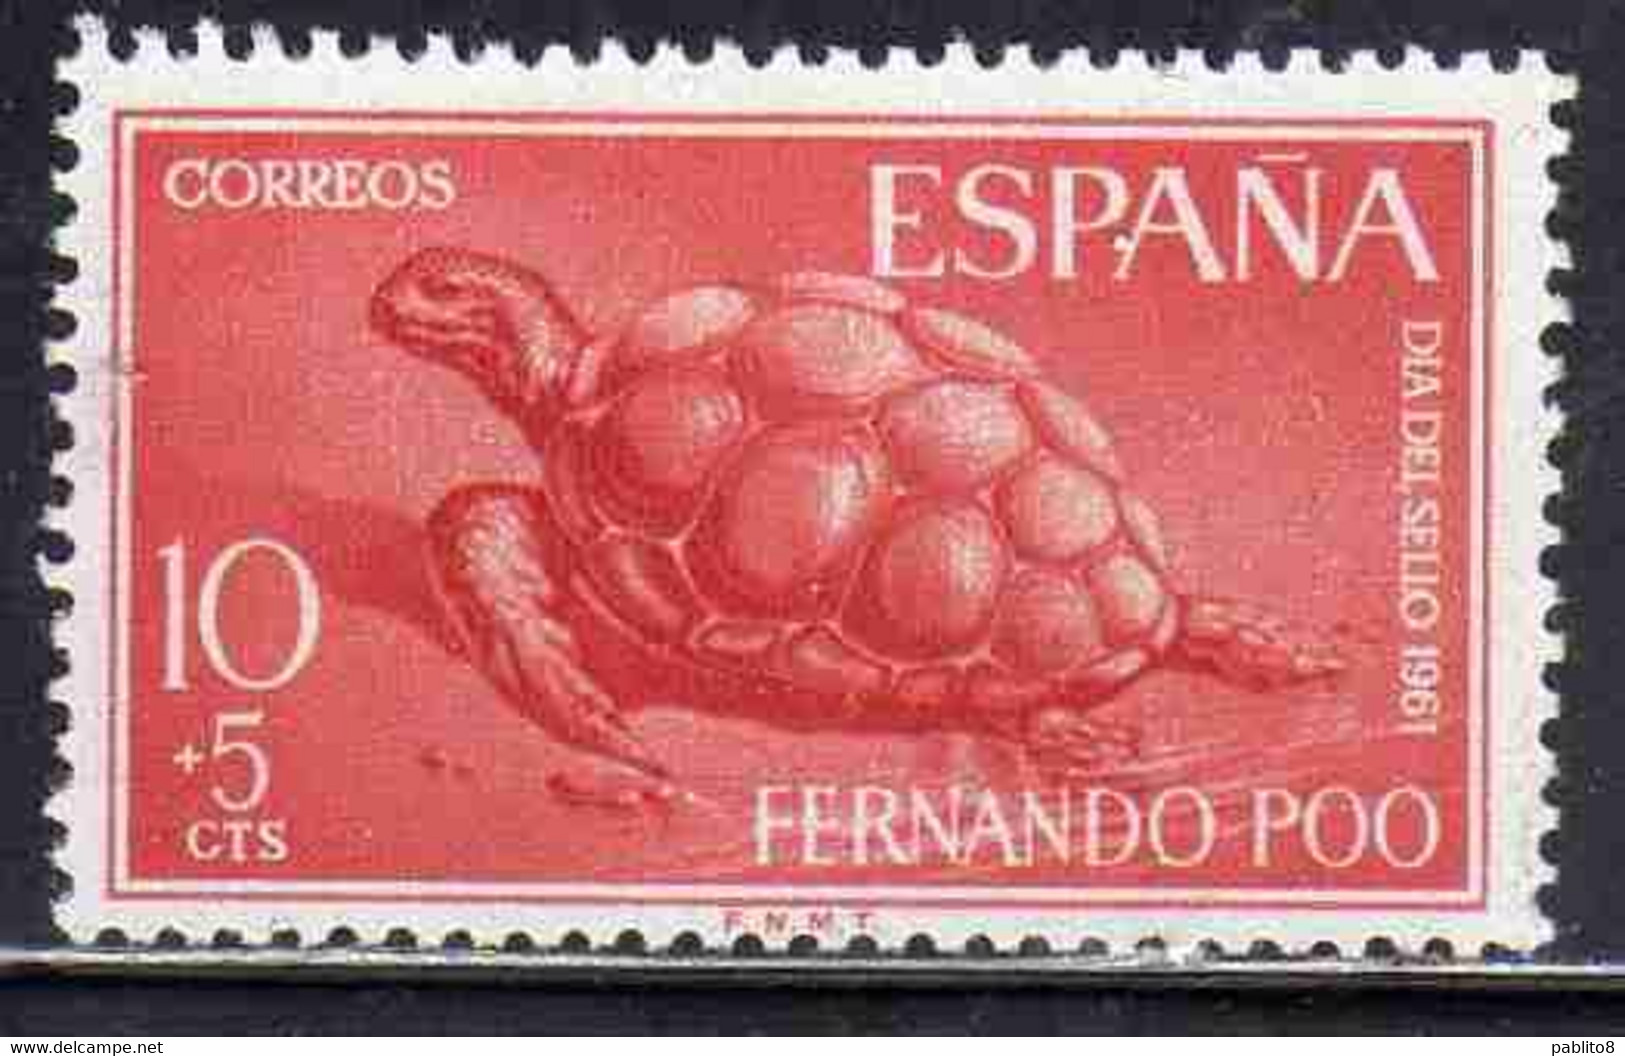 FERNANDO PO POO 1961 STAMP DAY DIA DEL SELLO ETHIOPIAN TORTOISE 10 + 5c MNH - Fernando Po